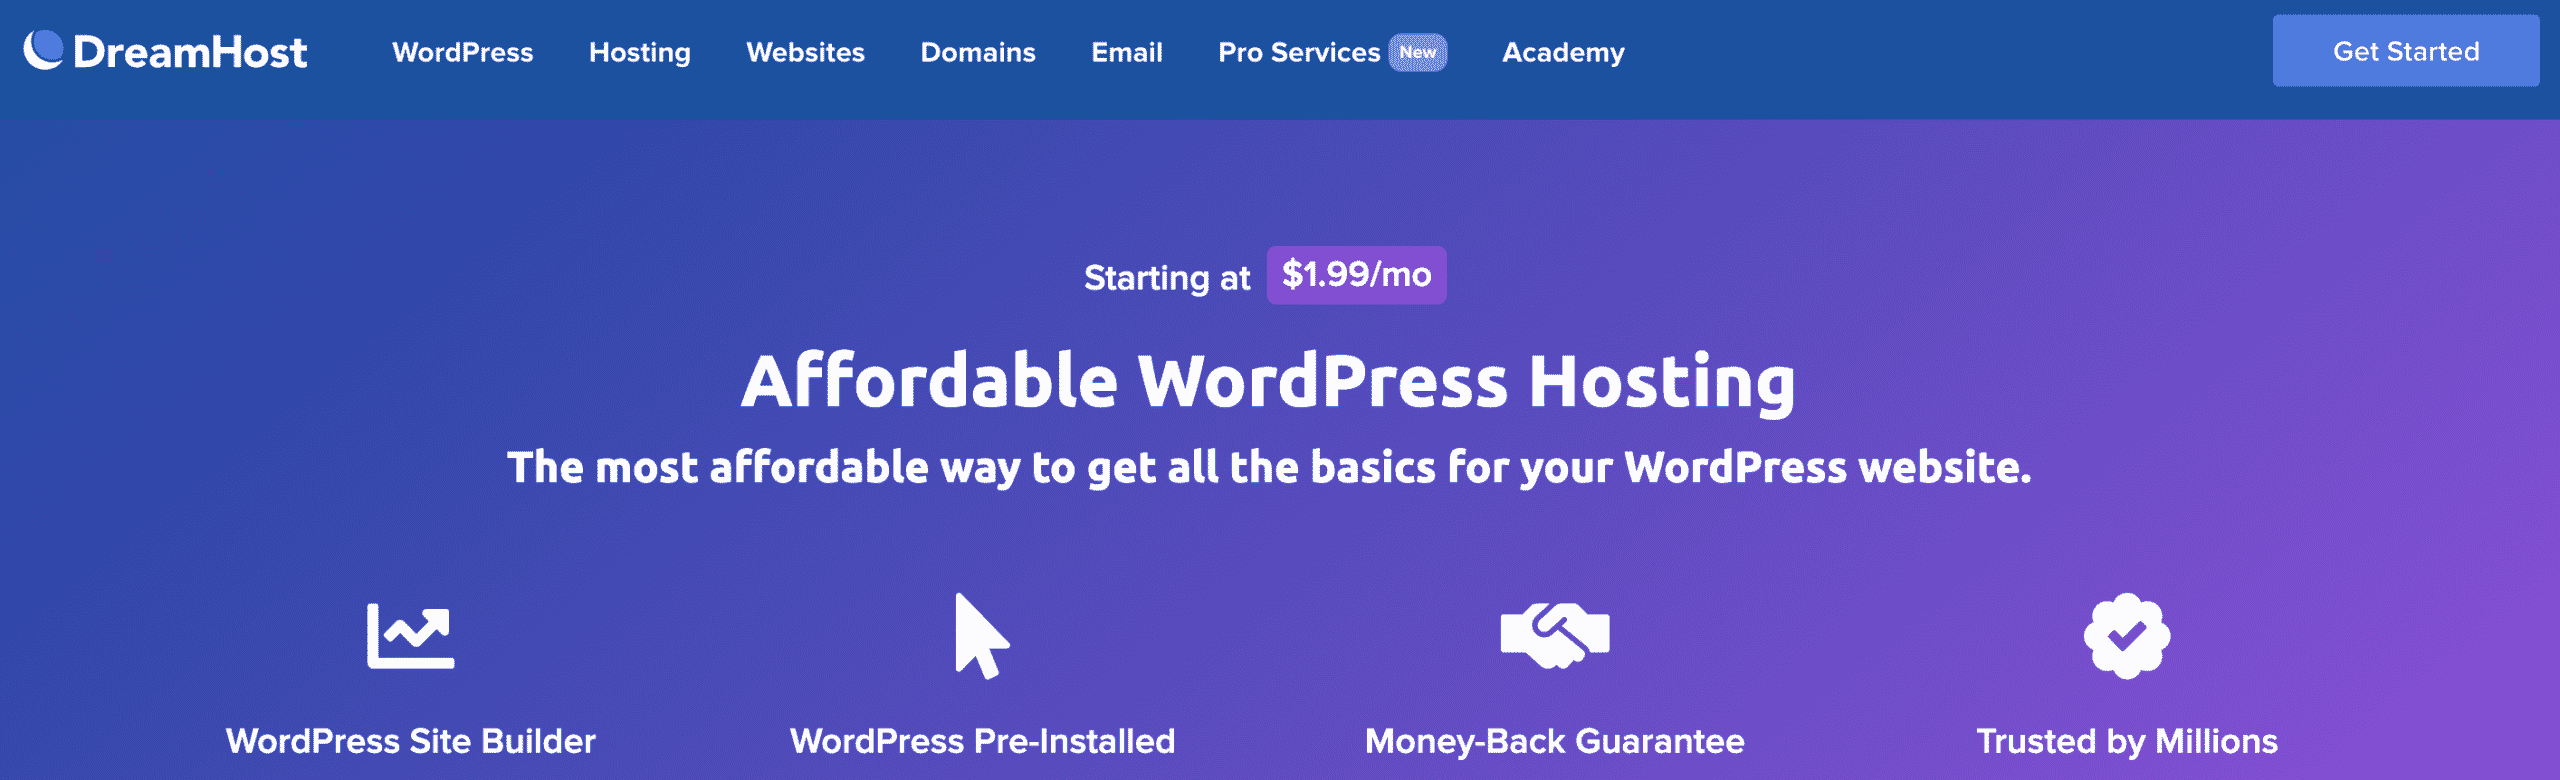 DreamHost cheap WordPress hosting starting at $1.99/month.